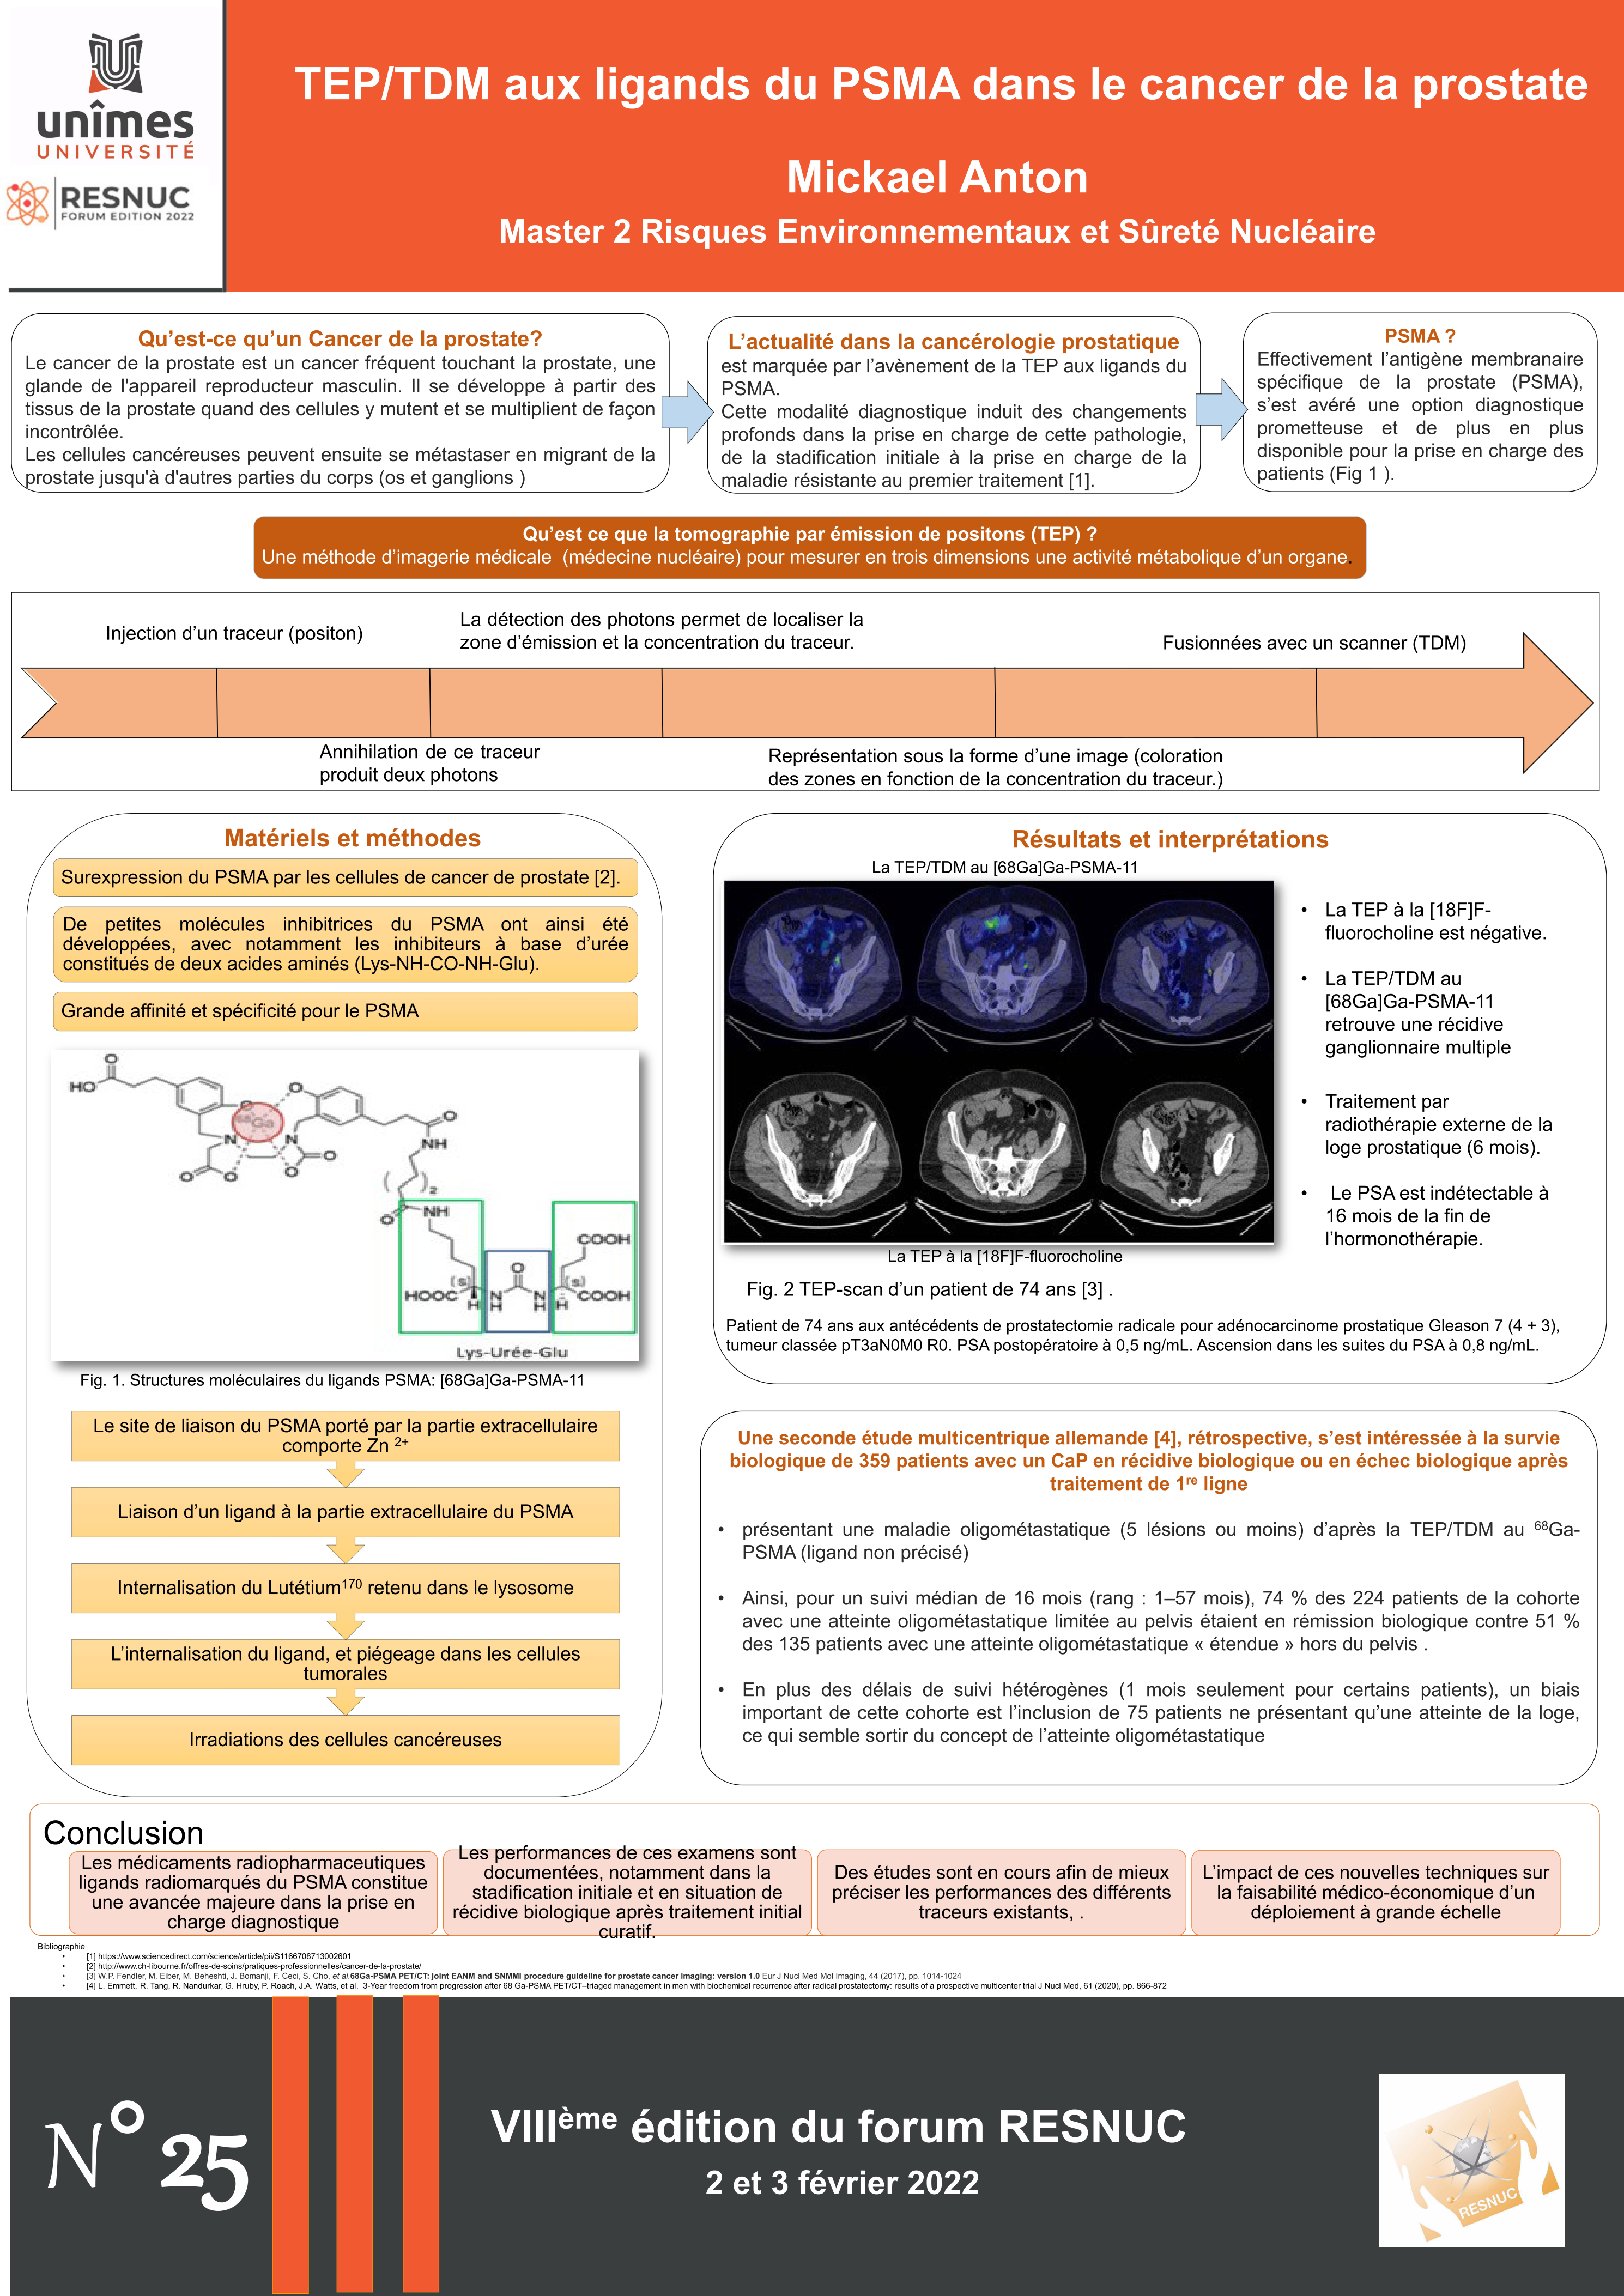 Poster #25 : TEP/TDM aux ligands du PSMA dans le cancer de la prostate